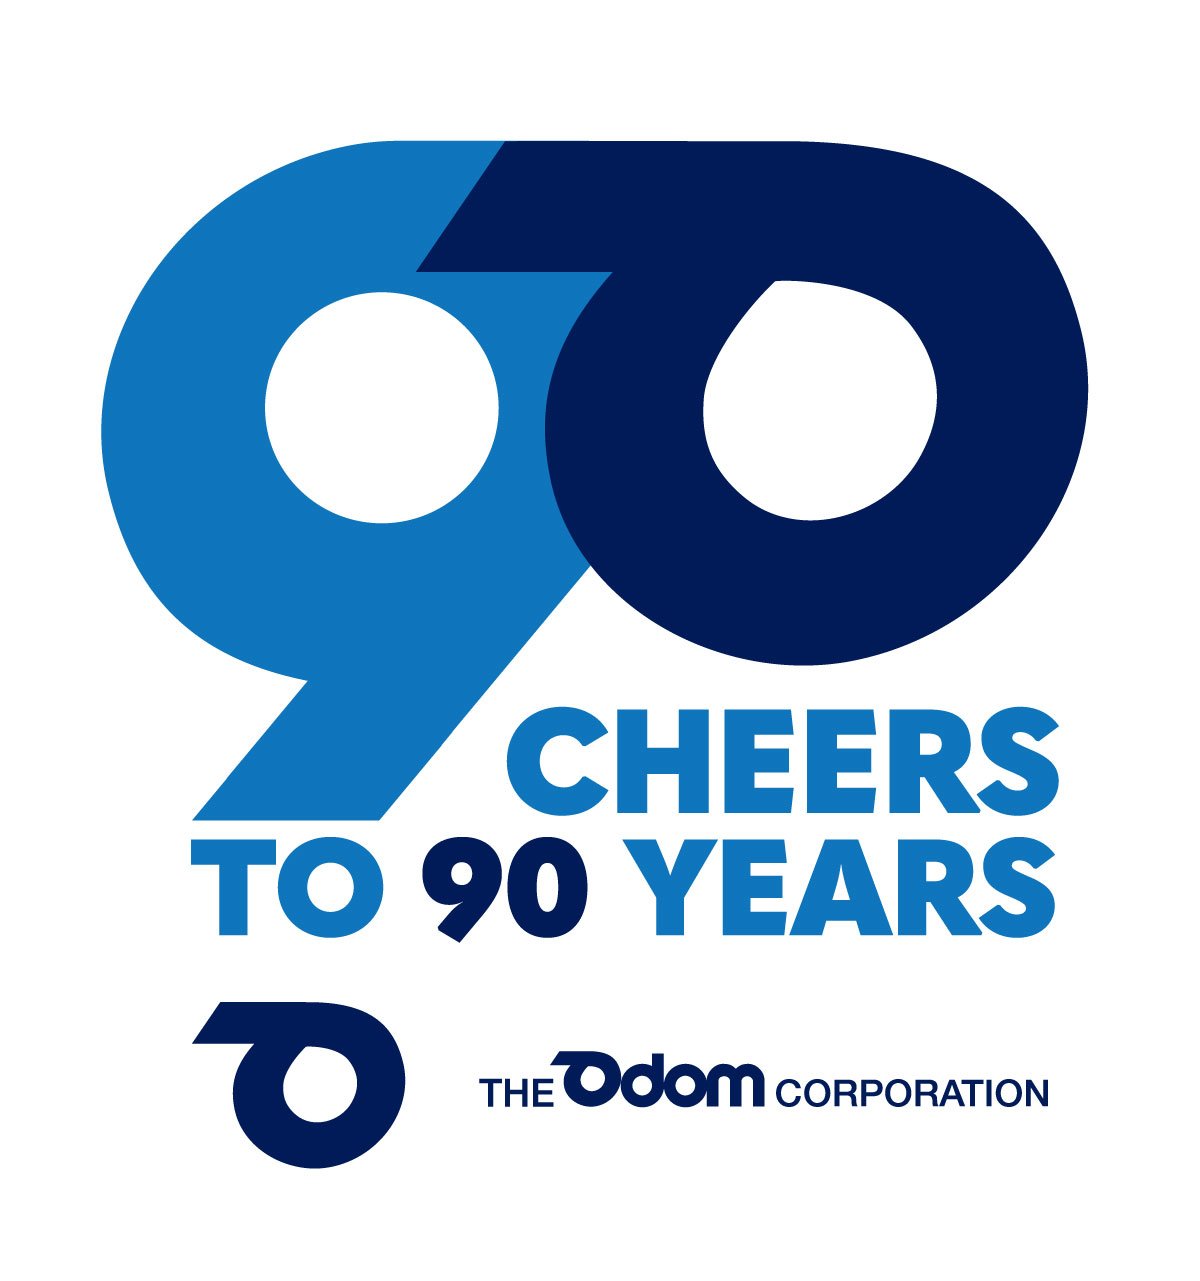 odom-corporation-90-years-logo-FINAL.jpg